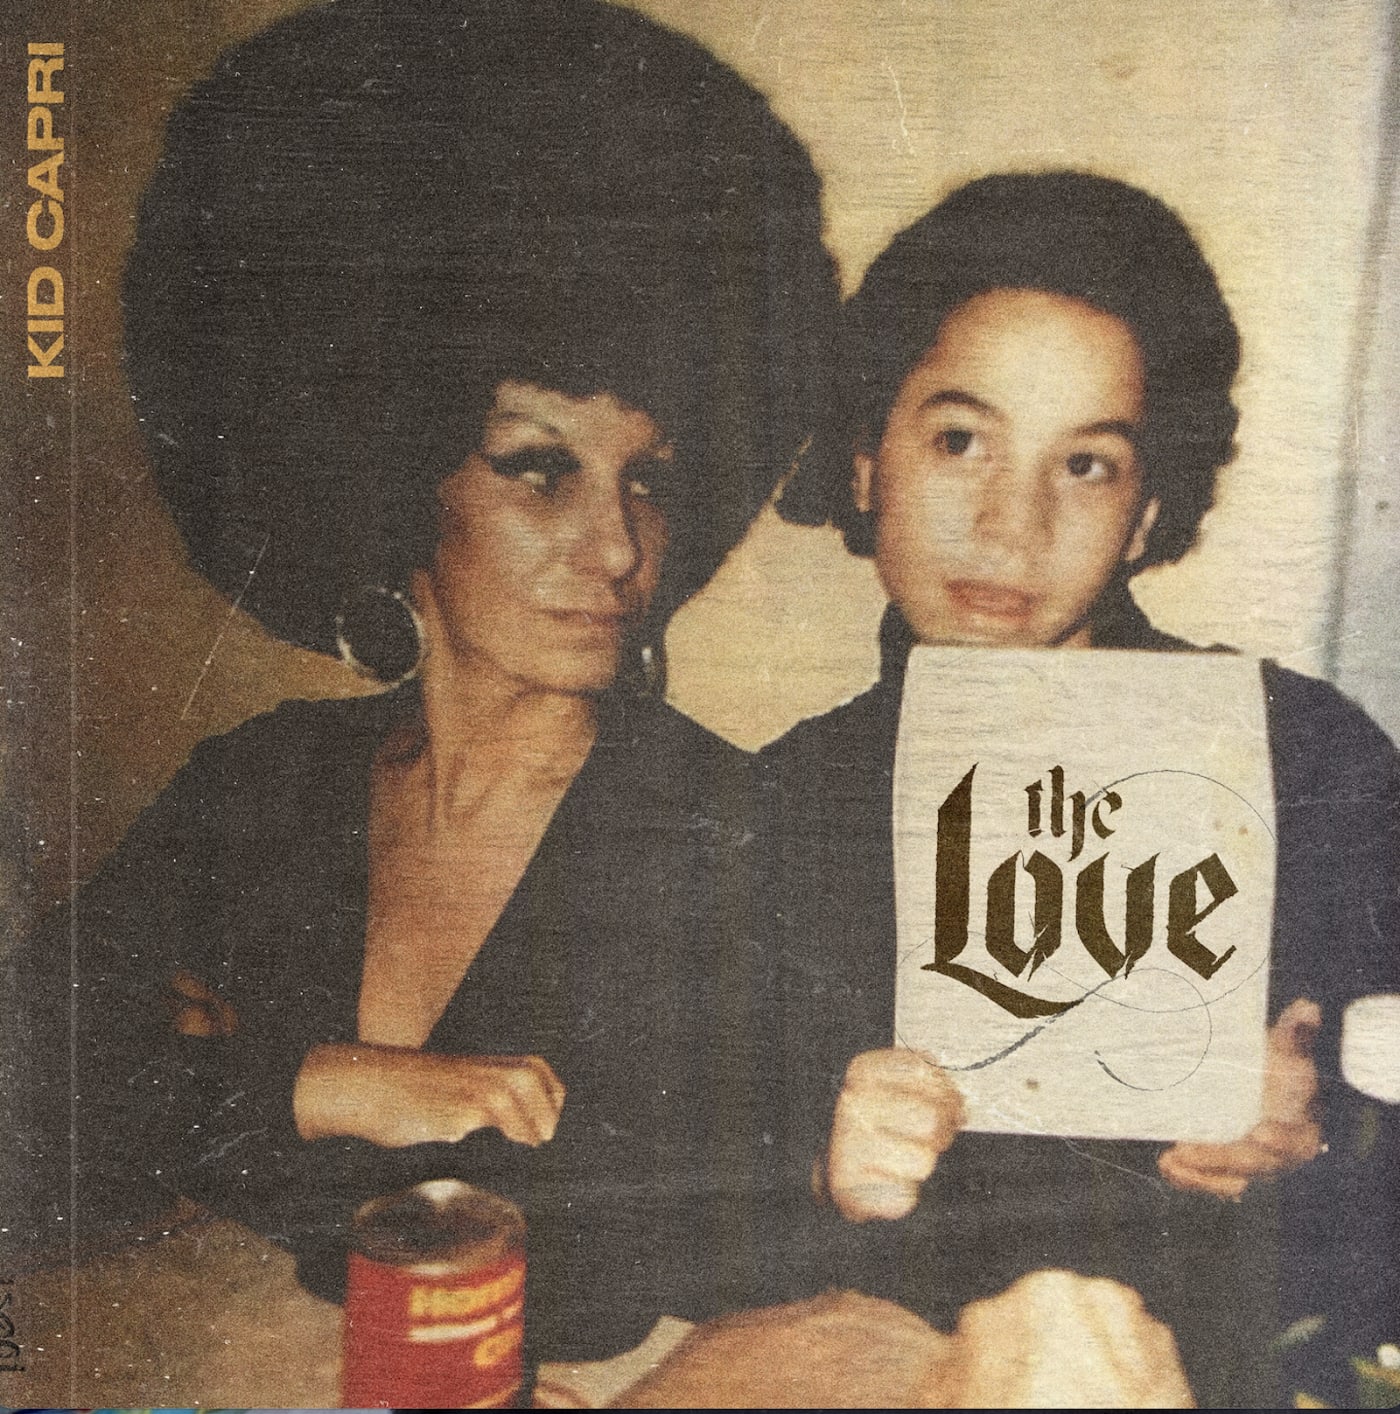 Kid Capri's new album 'The Love'